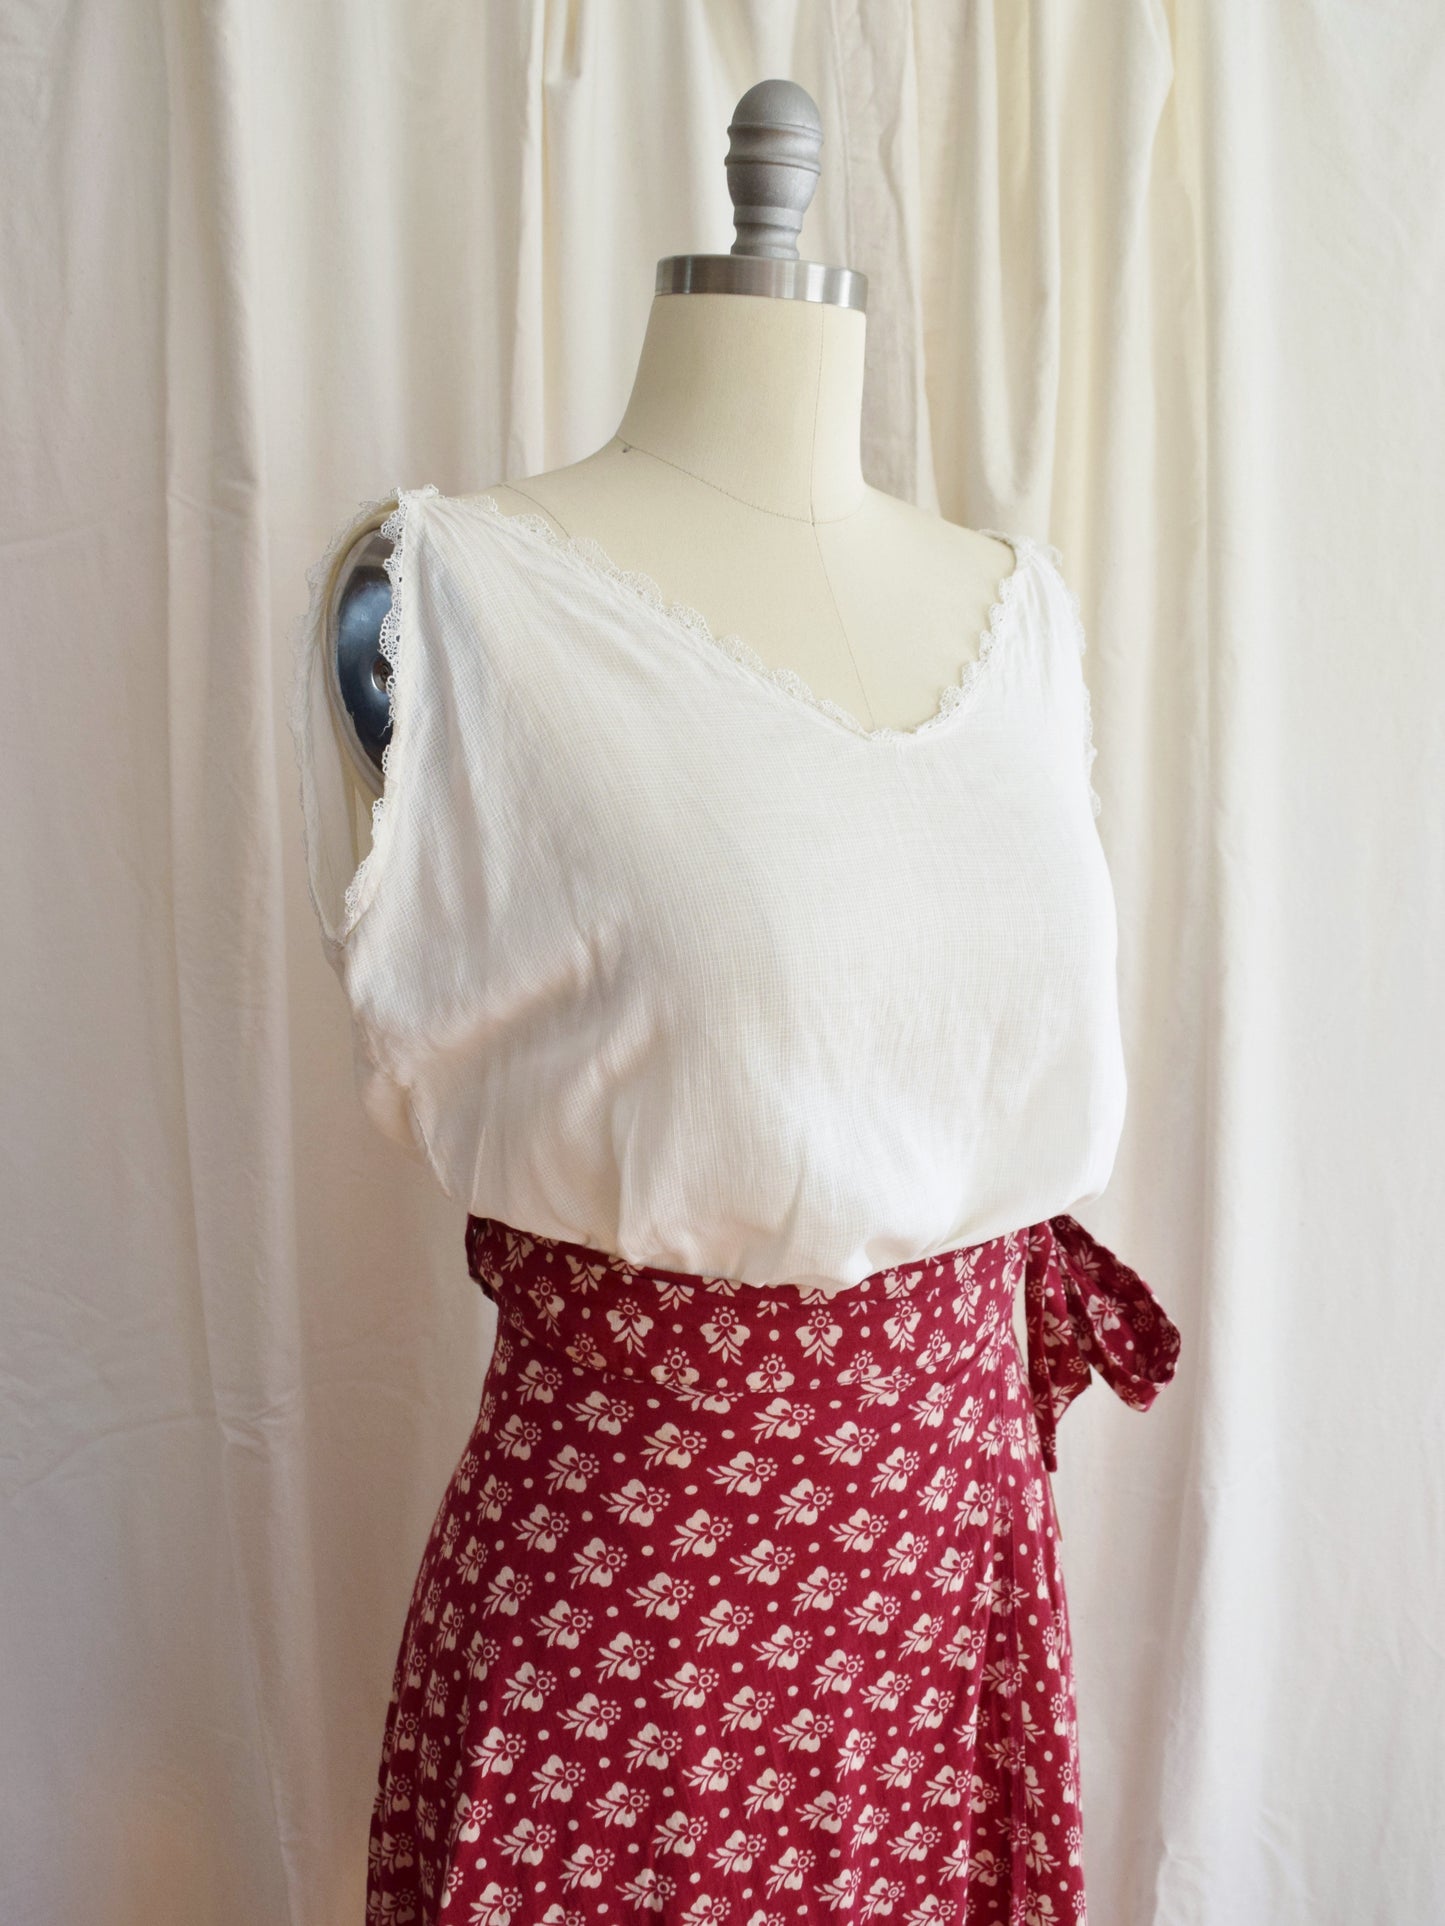 Edwardian Era Cotton Blouse / Antique Undershirt